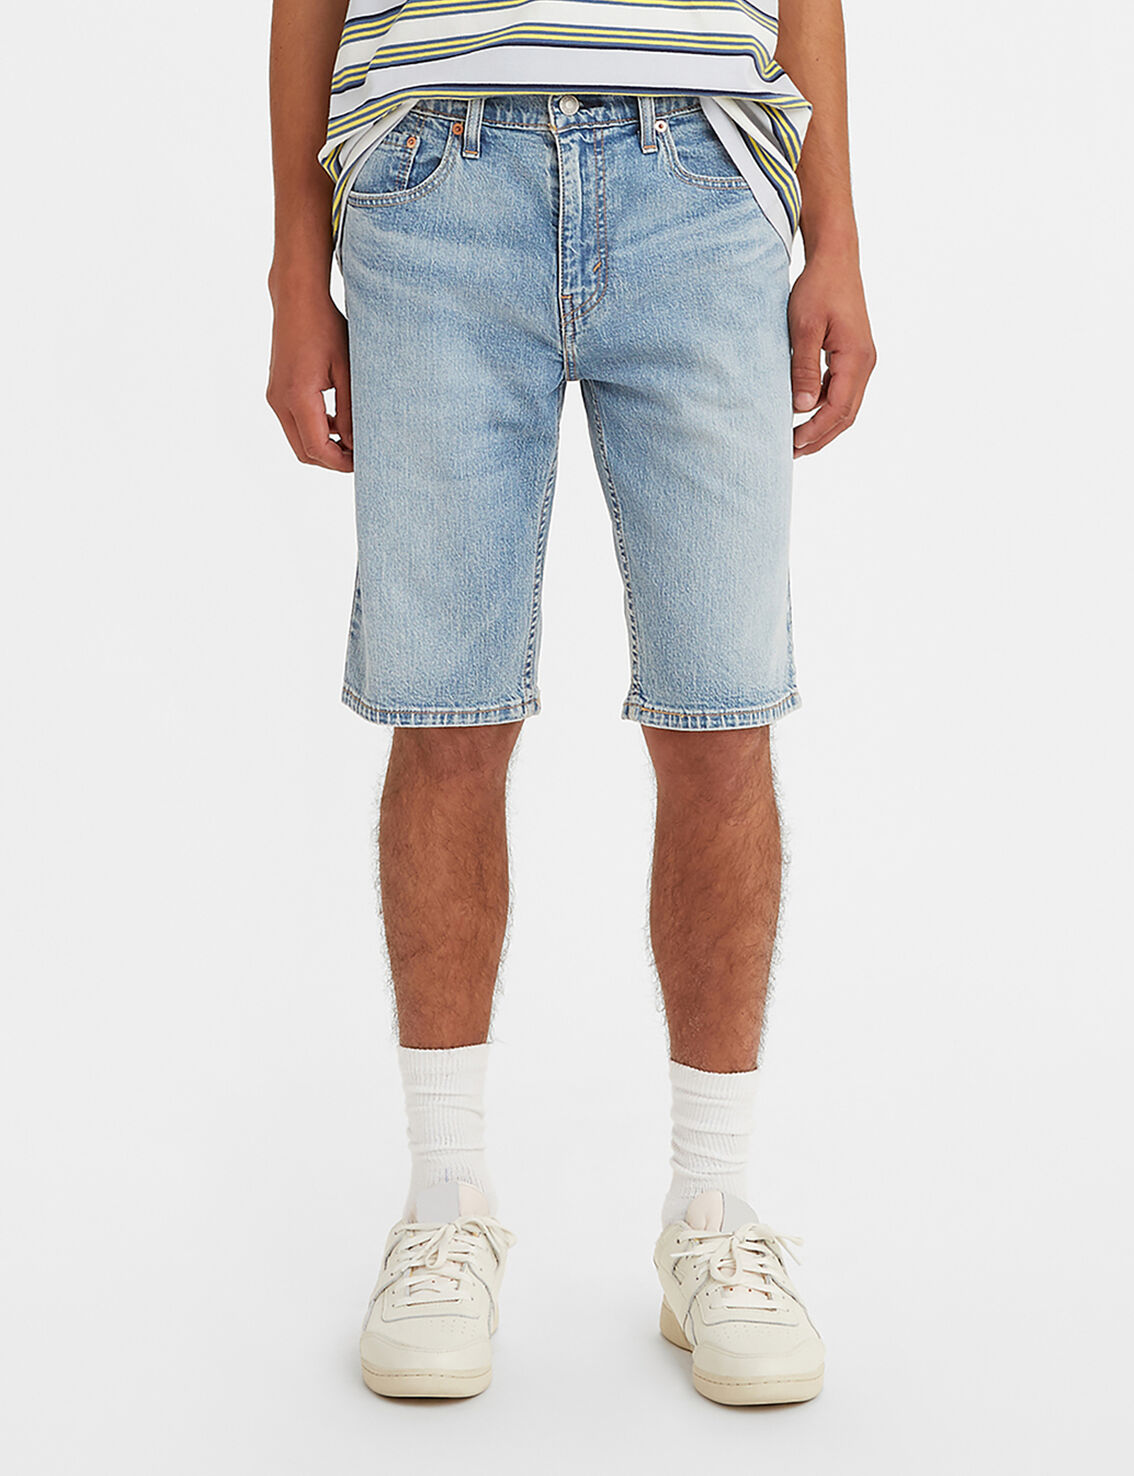 Standard Jean Shorts